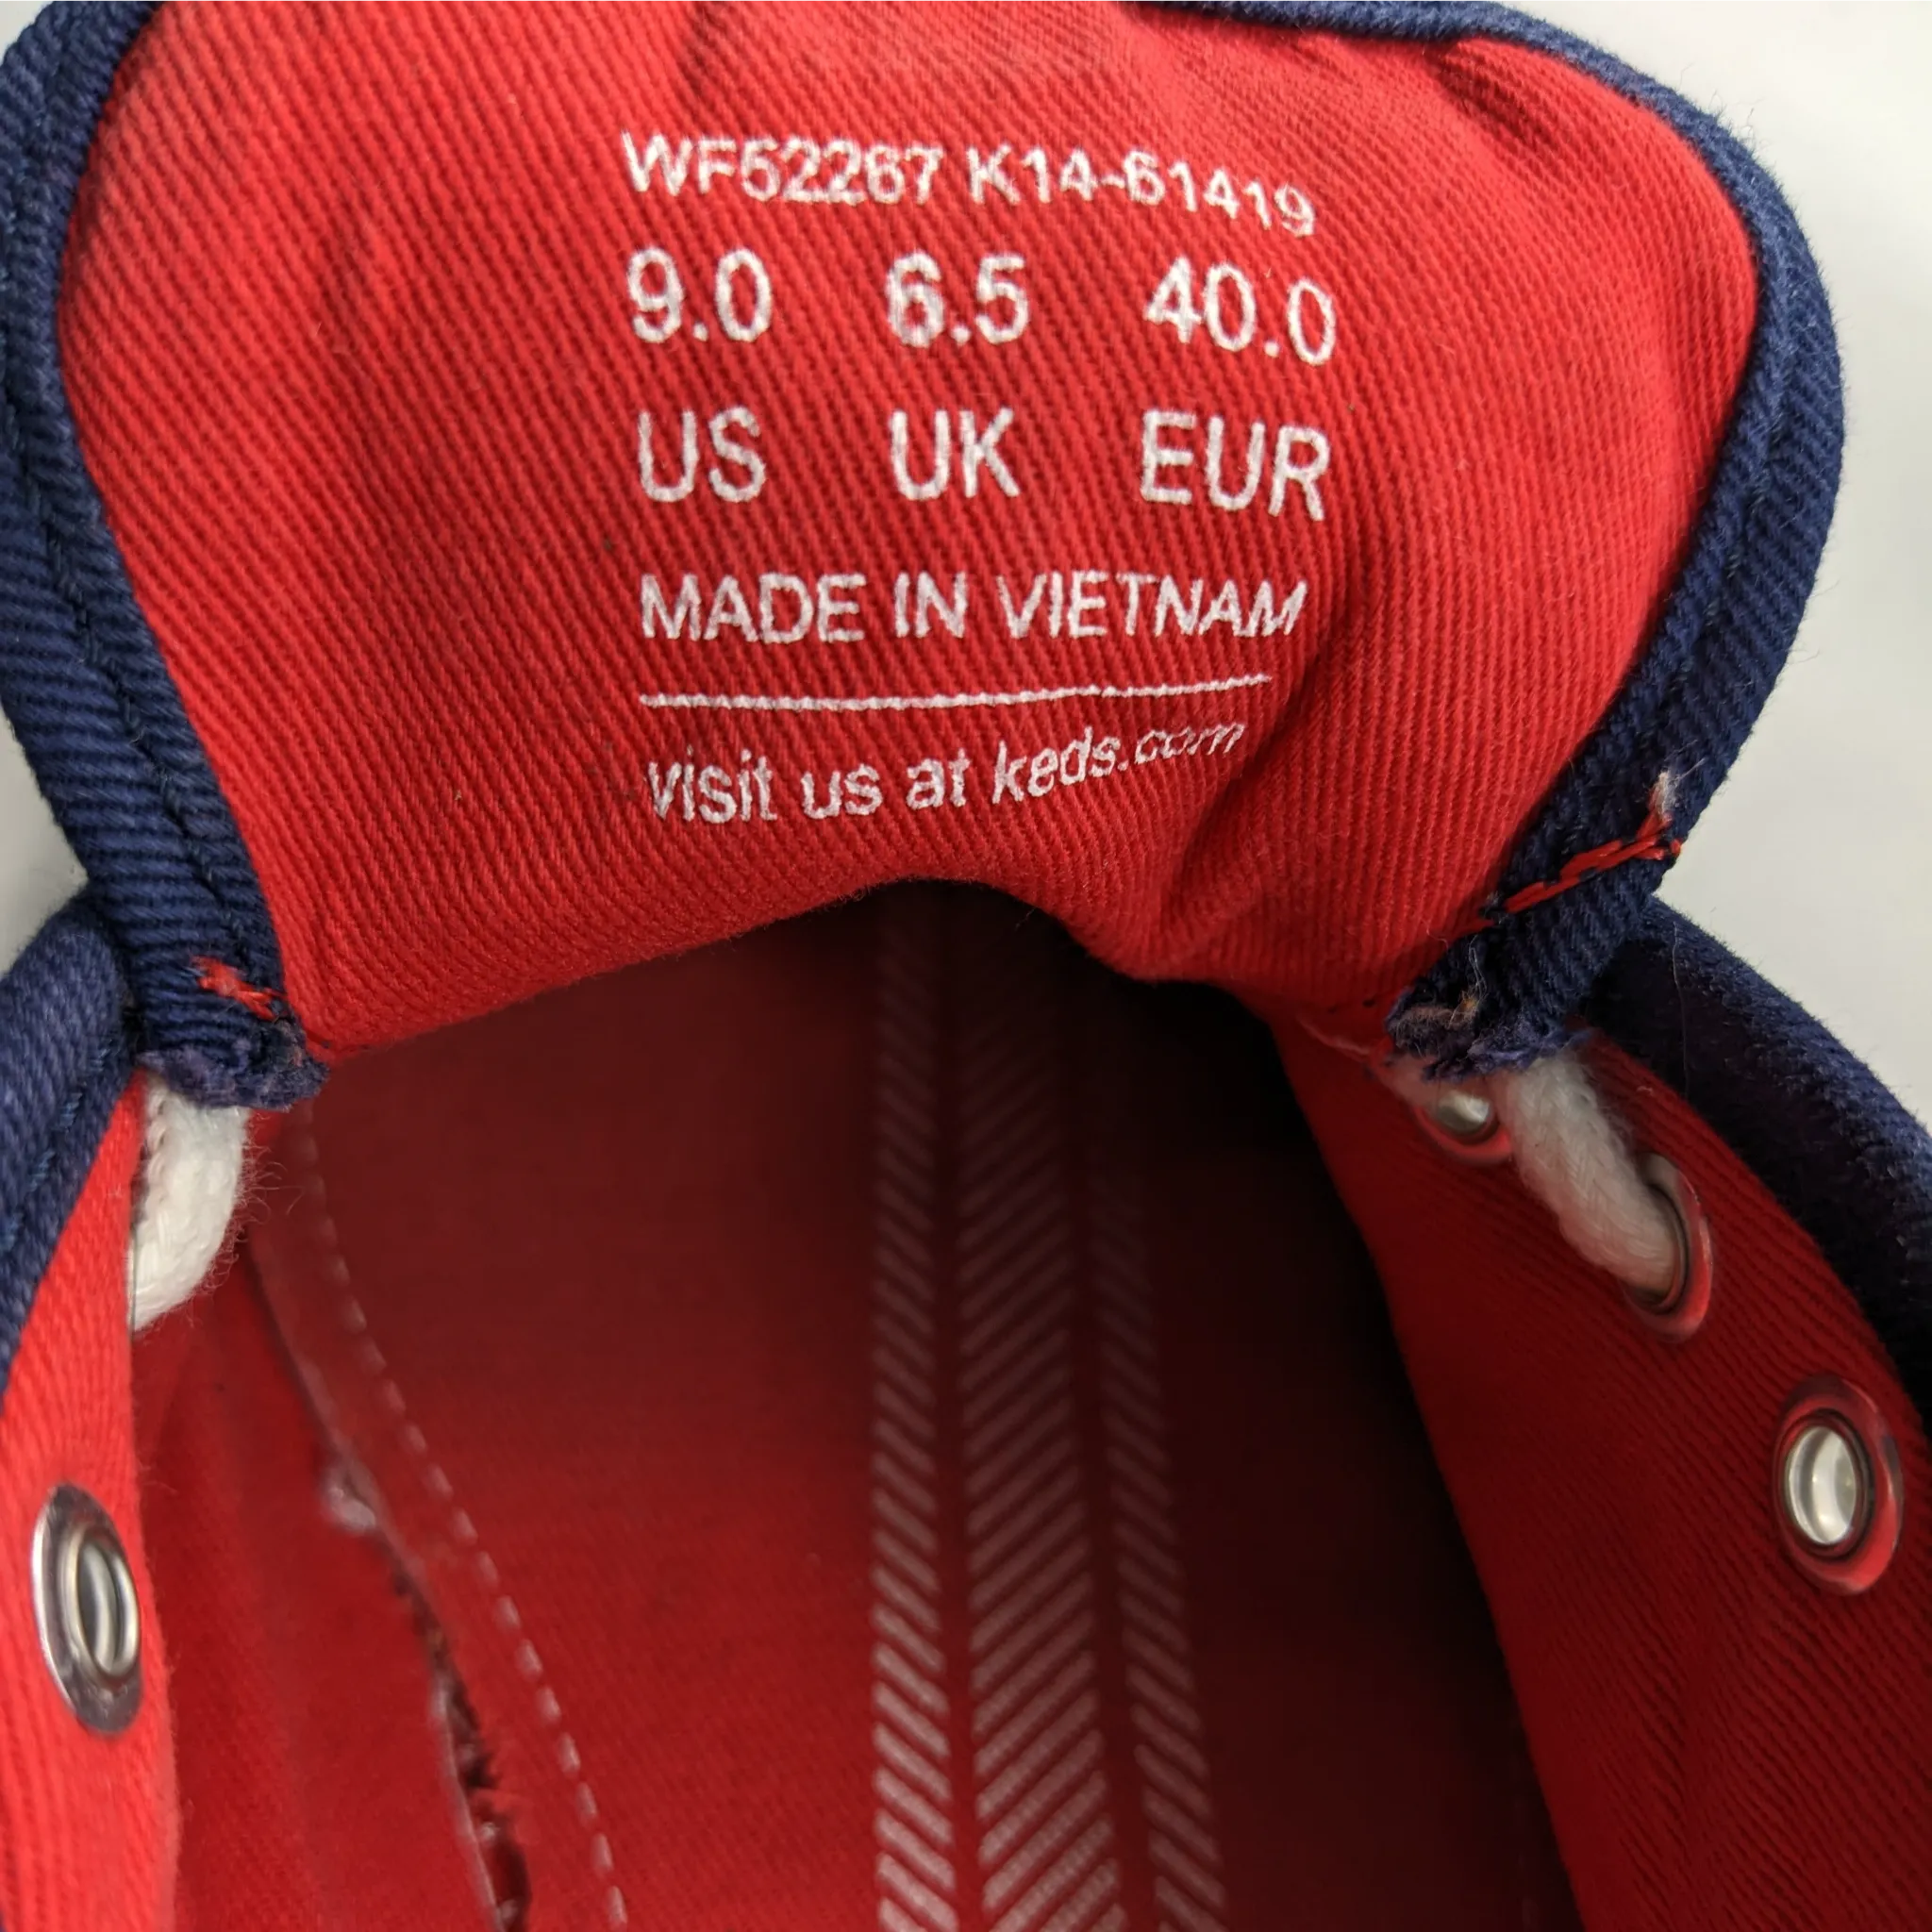 Keds Blue Sneakers Premium V